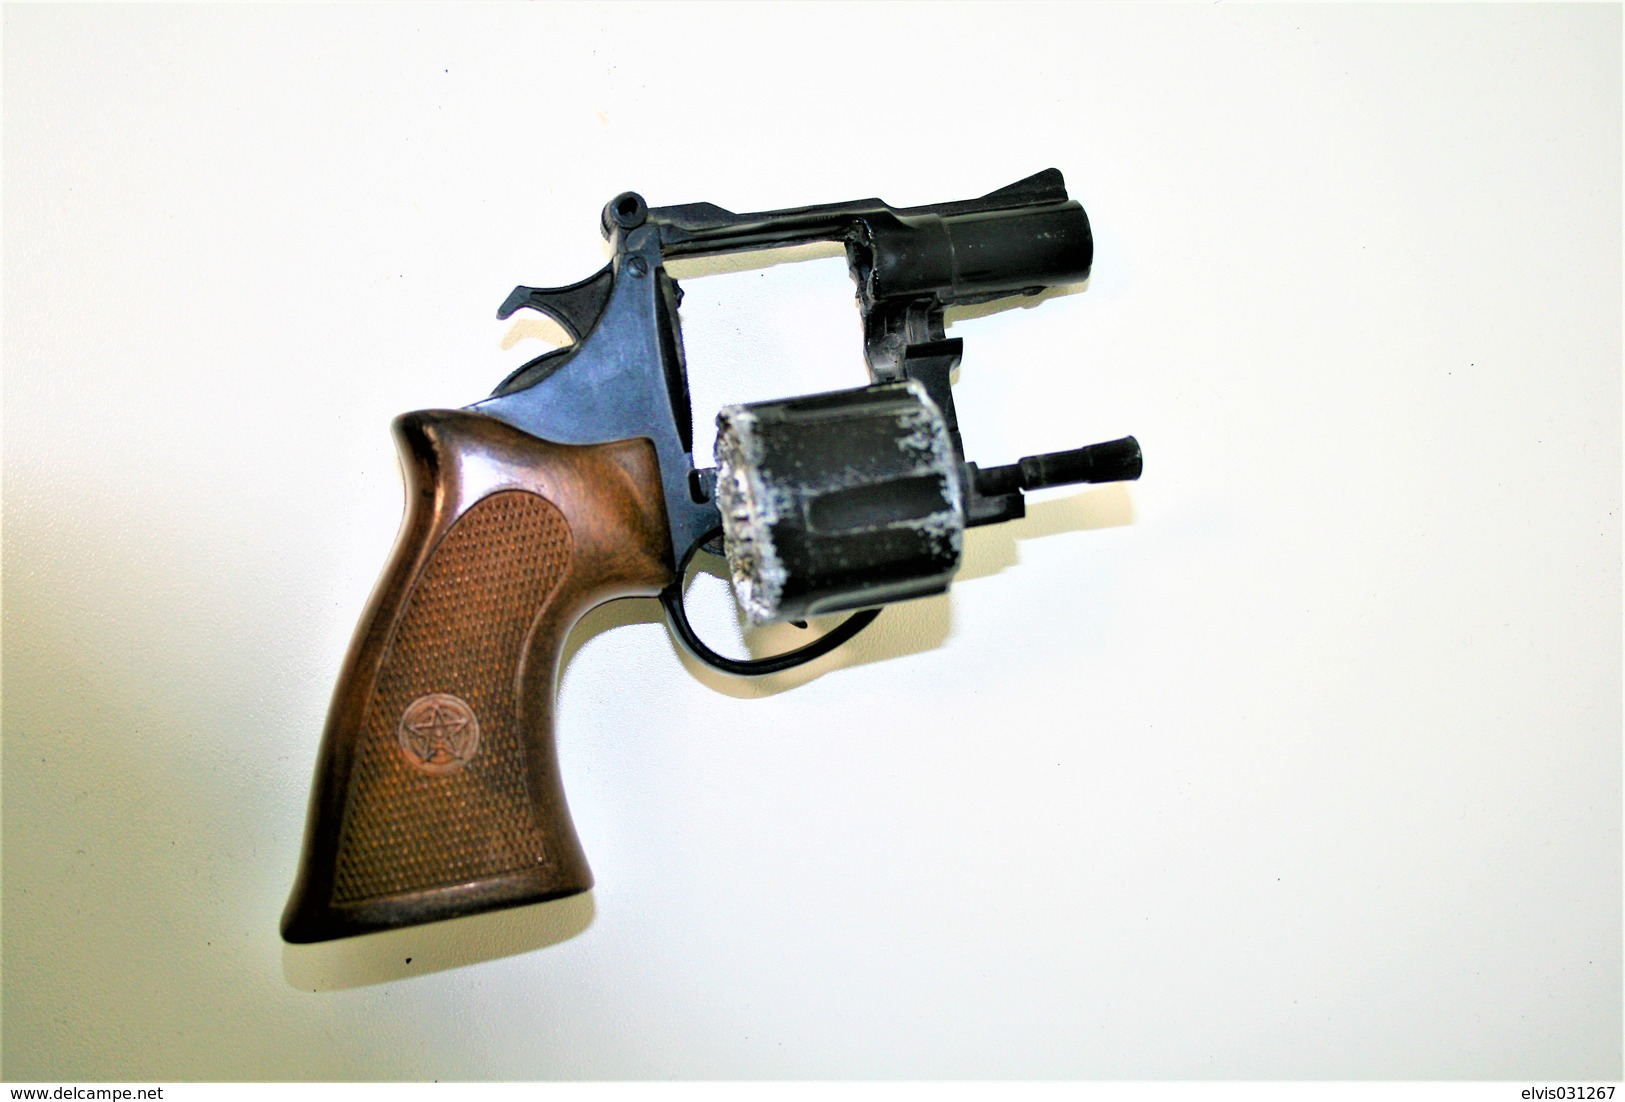 Vintage TOY GUN : KAT80181-1 By Edison Giocattoli - L=16cm - 19??s - Keywords : Cap Gun - Cork - Revolver - Pistol - Armi Da Collezione